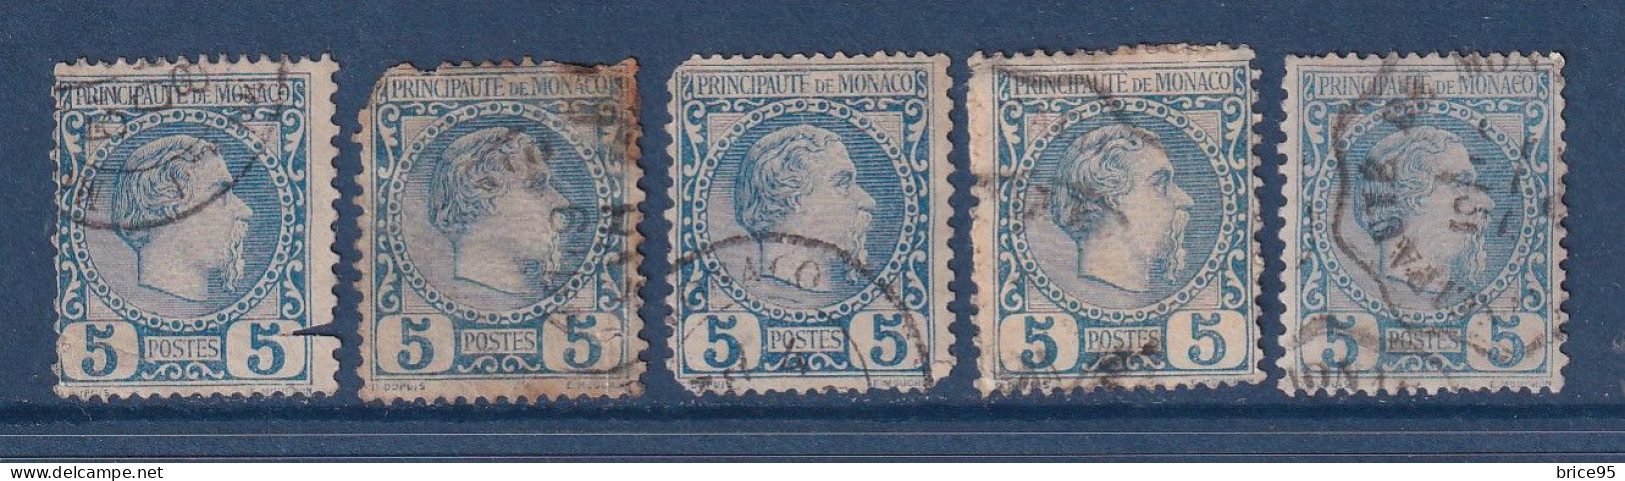 Monaco - YT N° 3 - Oblitéré - 1885 - Used Stamps